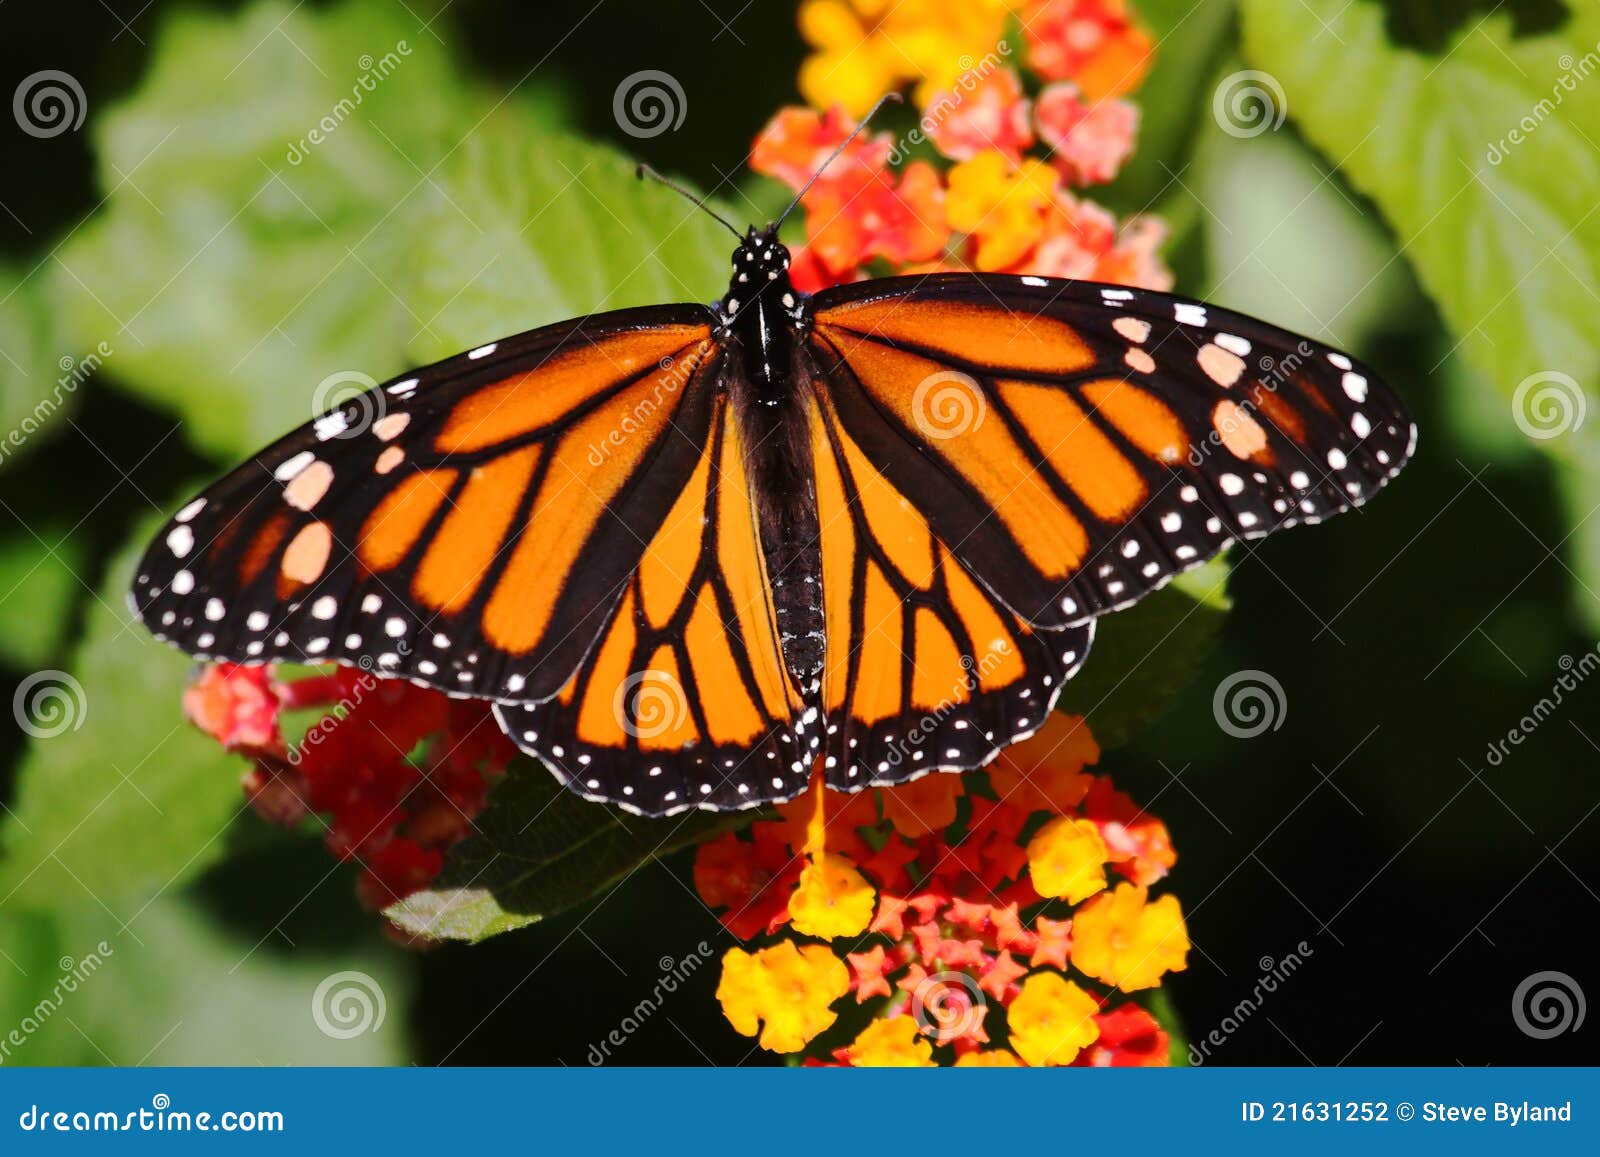 monarch butterfly (danaus plexippus) on flowers